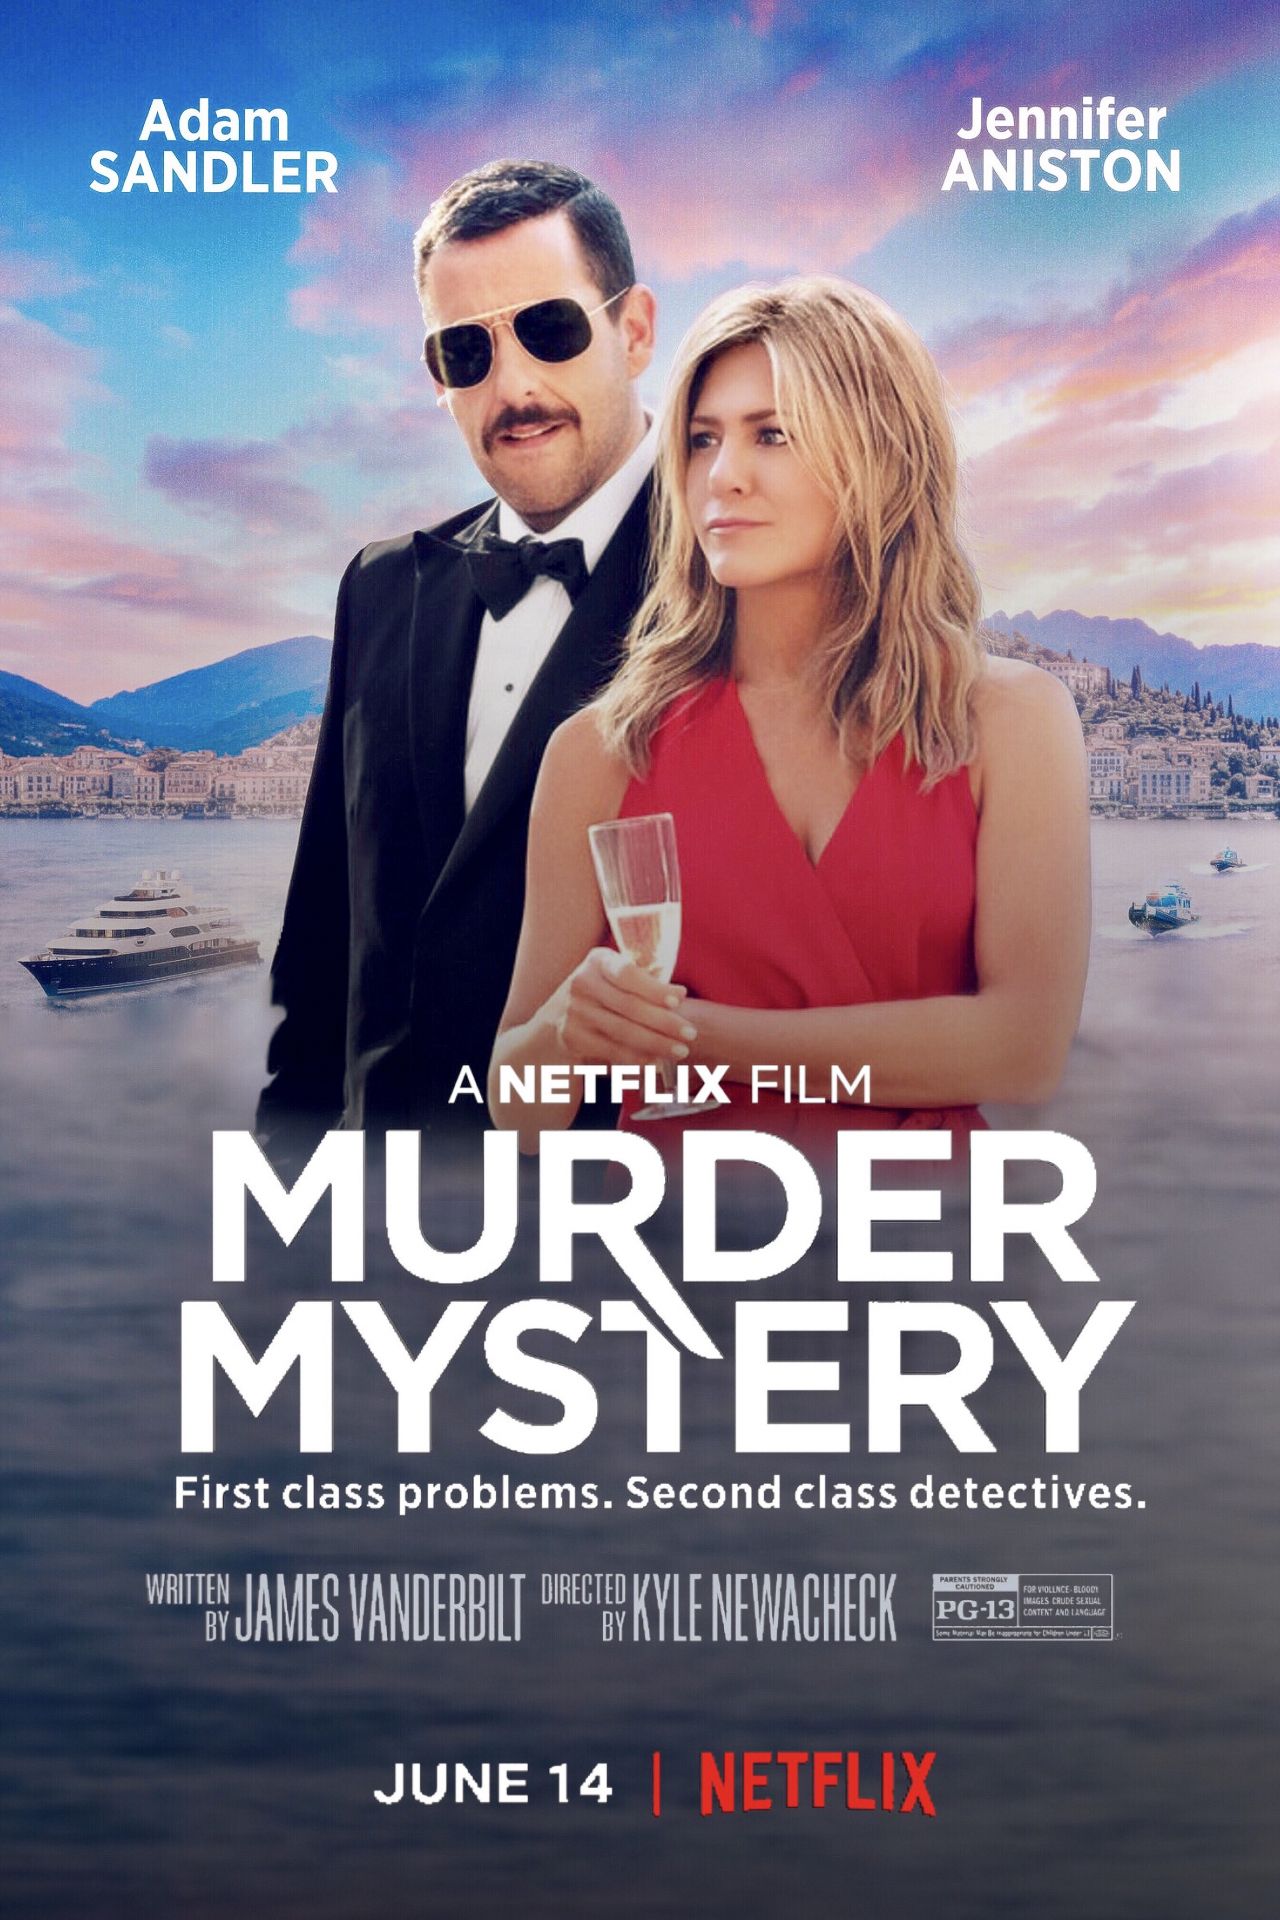 Adam Sandler teases Murder Mystery 3